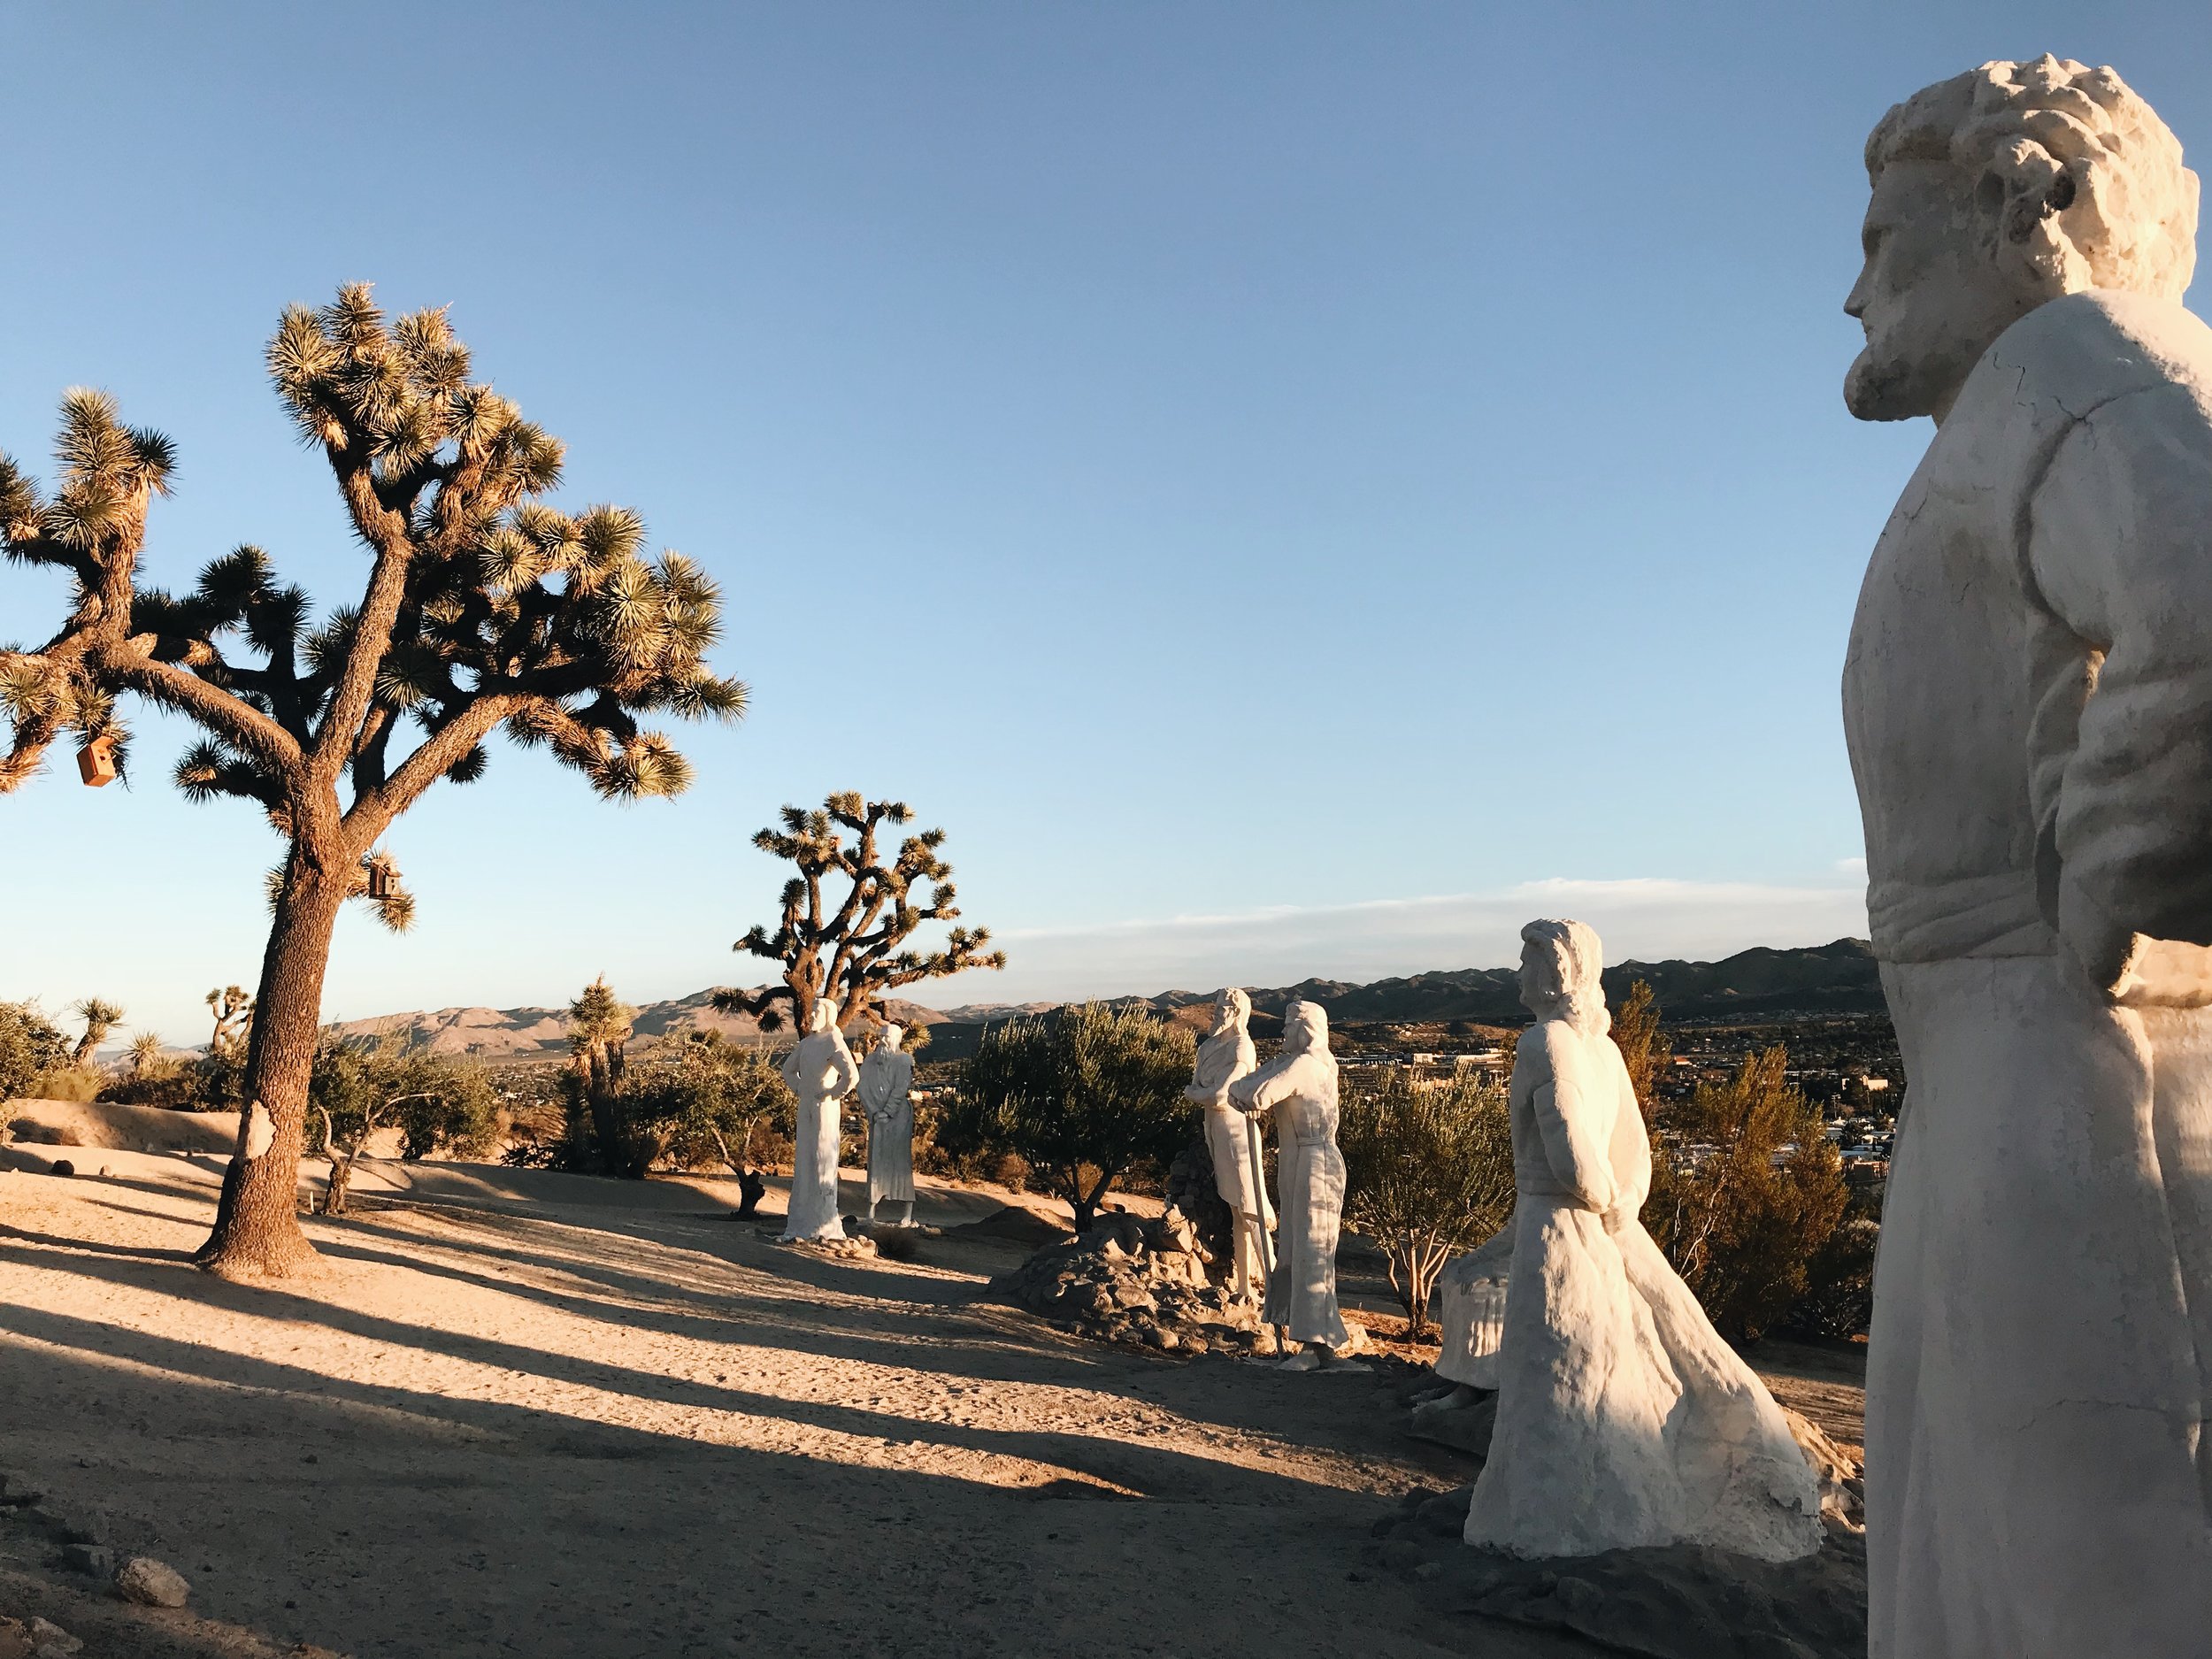 Visit the Biblical Statues of Desert Christ Park